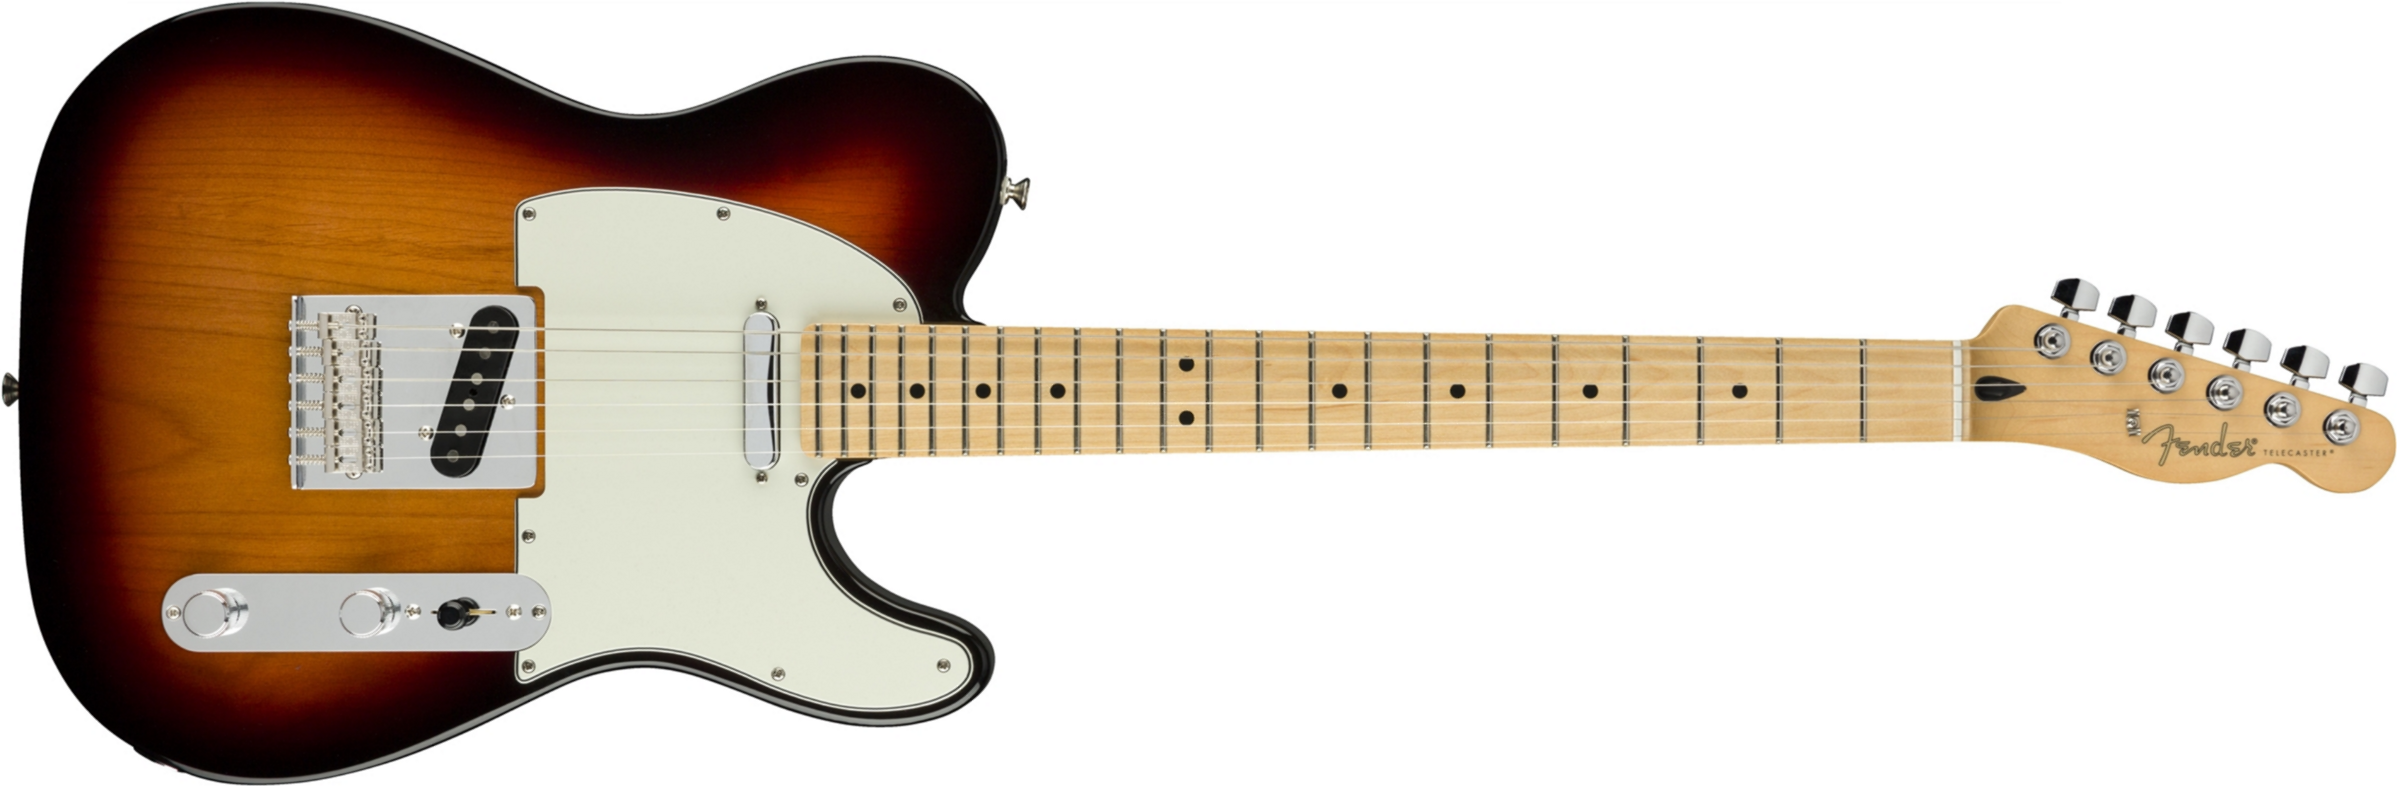 Fender Tele Player Mex Mn - 3-color Sunburst - Televorm elektrische gitaar - Main picture